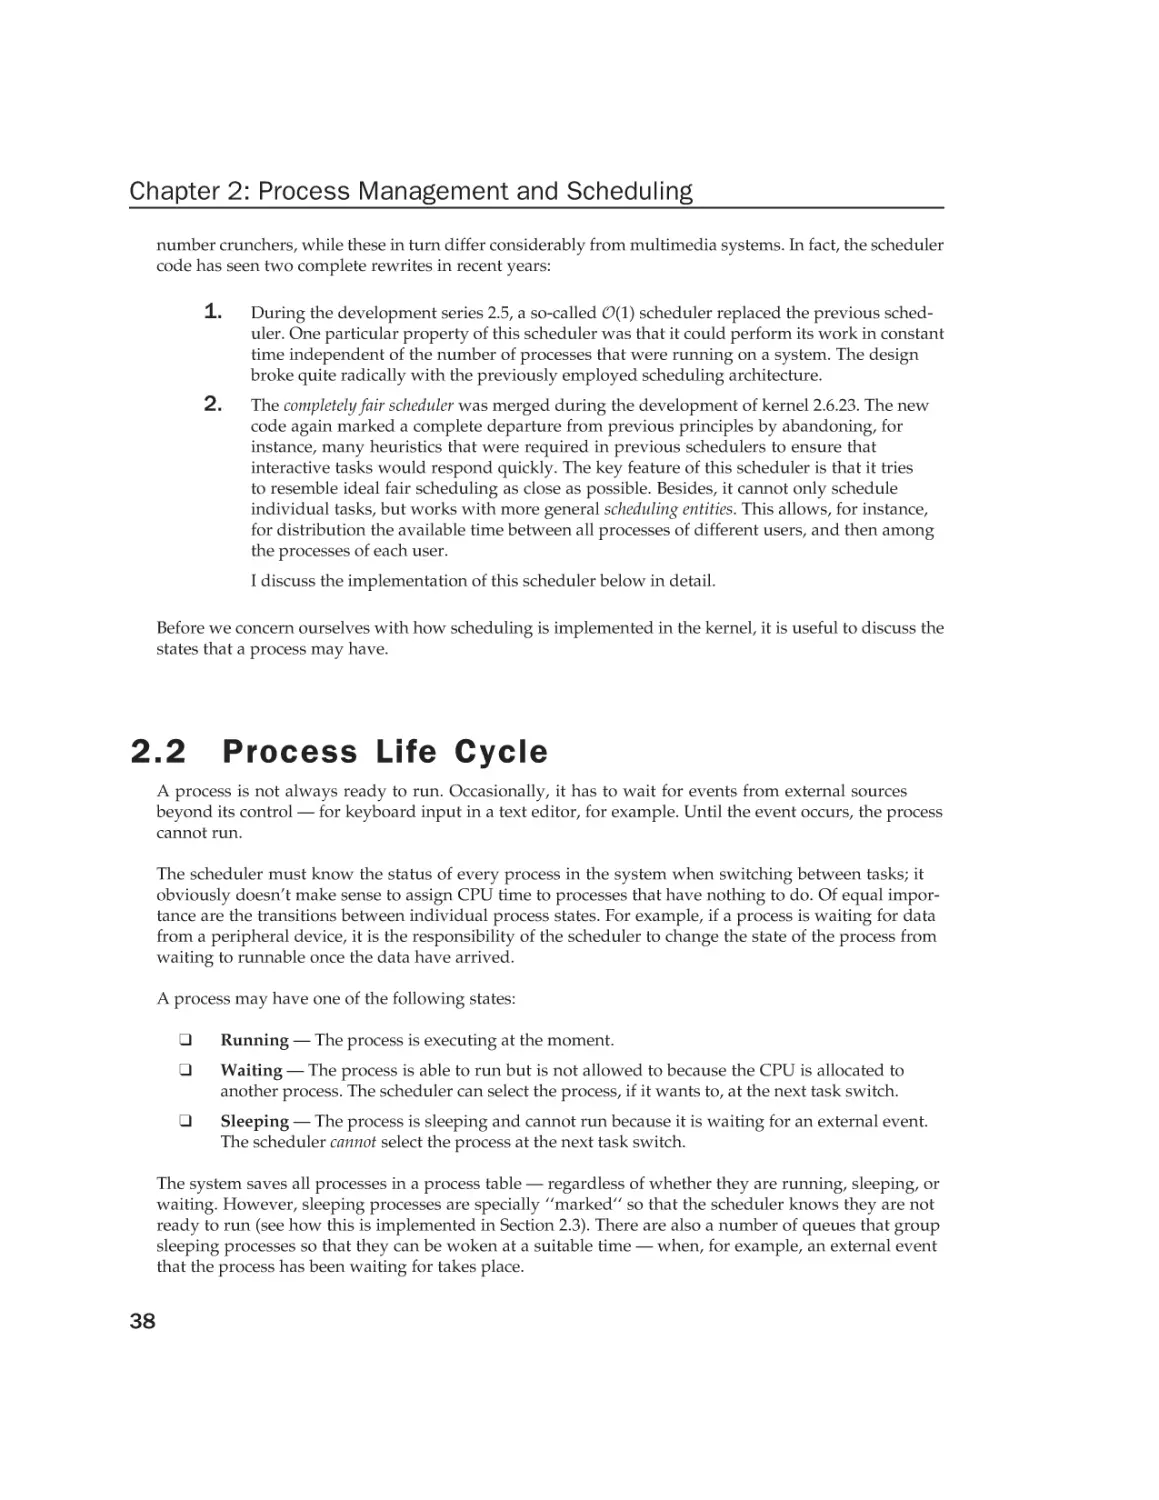 2.2 Process Life Cycle